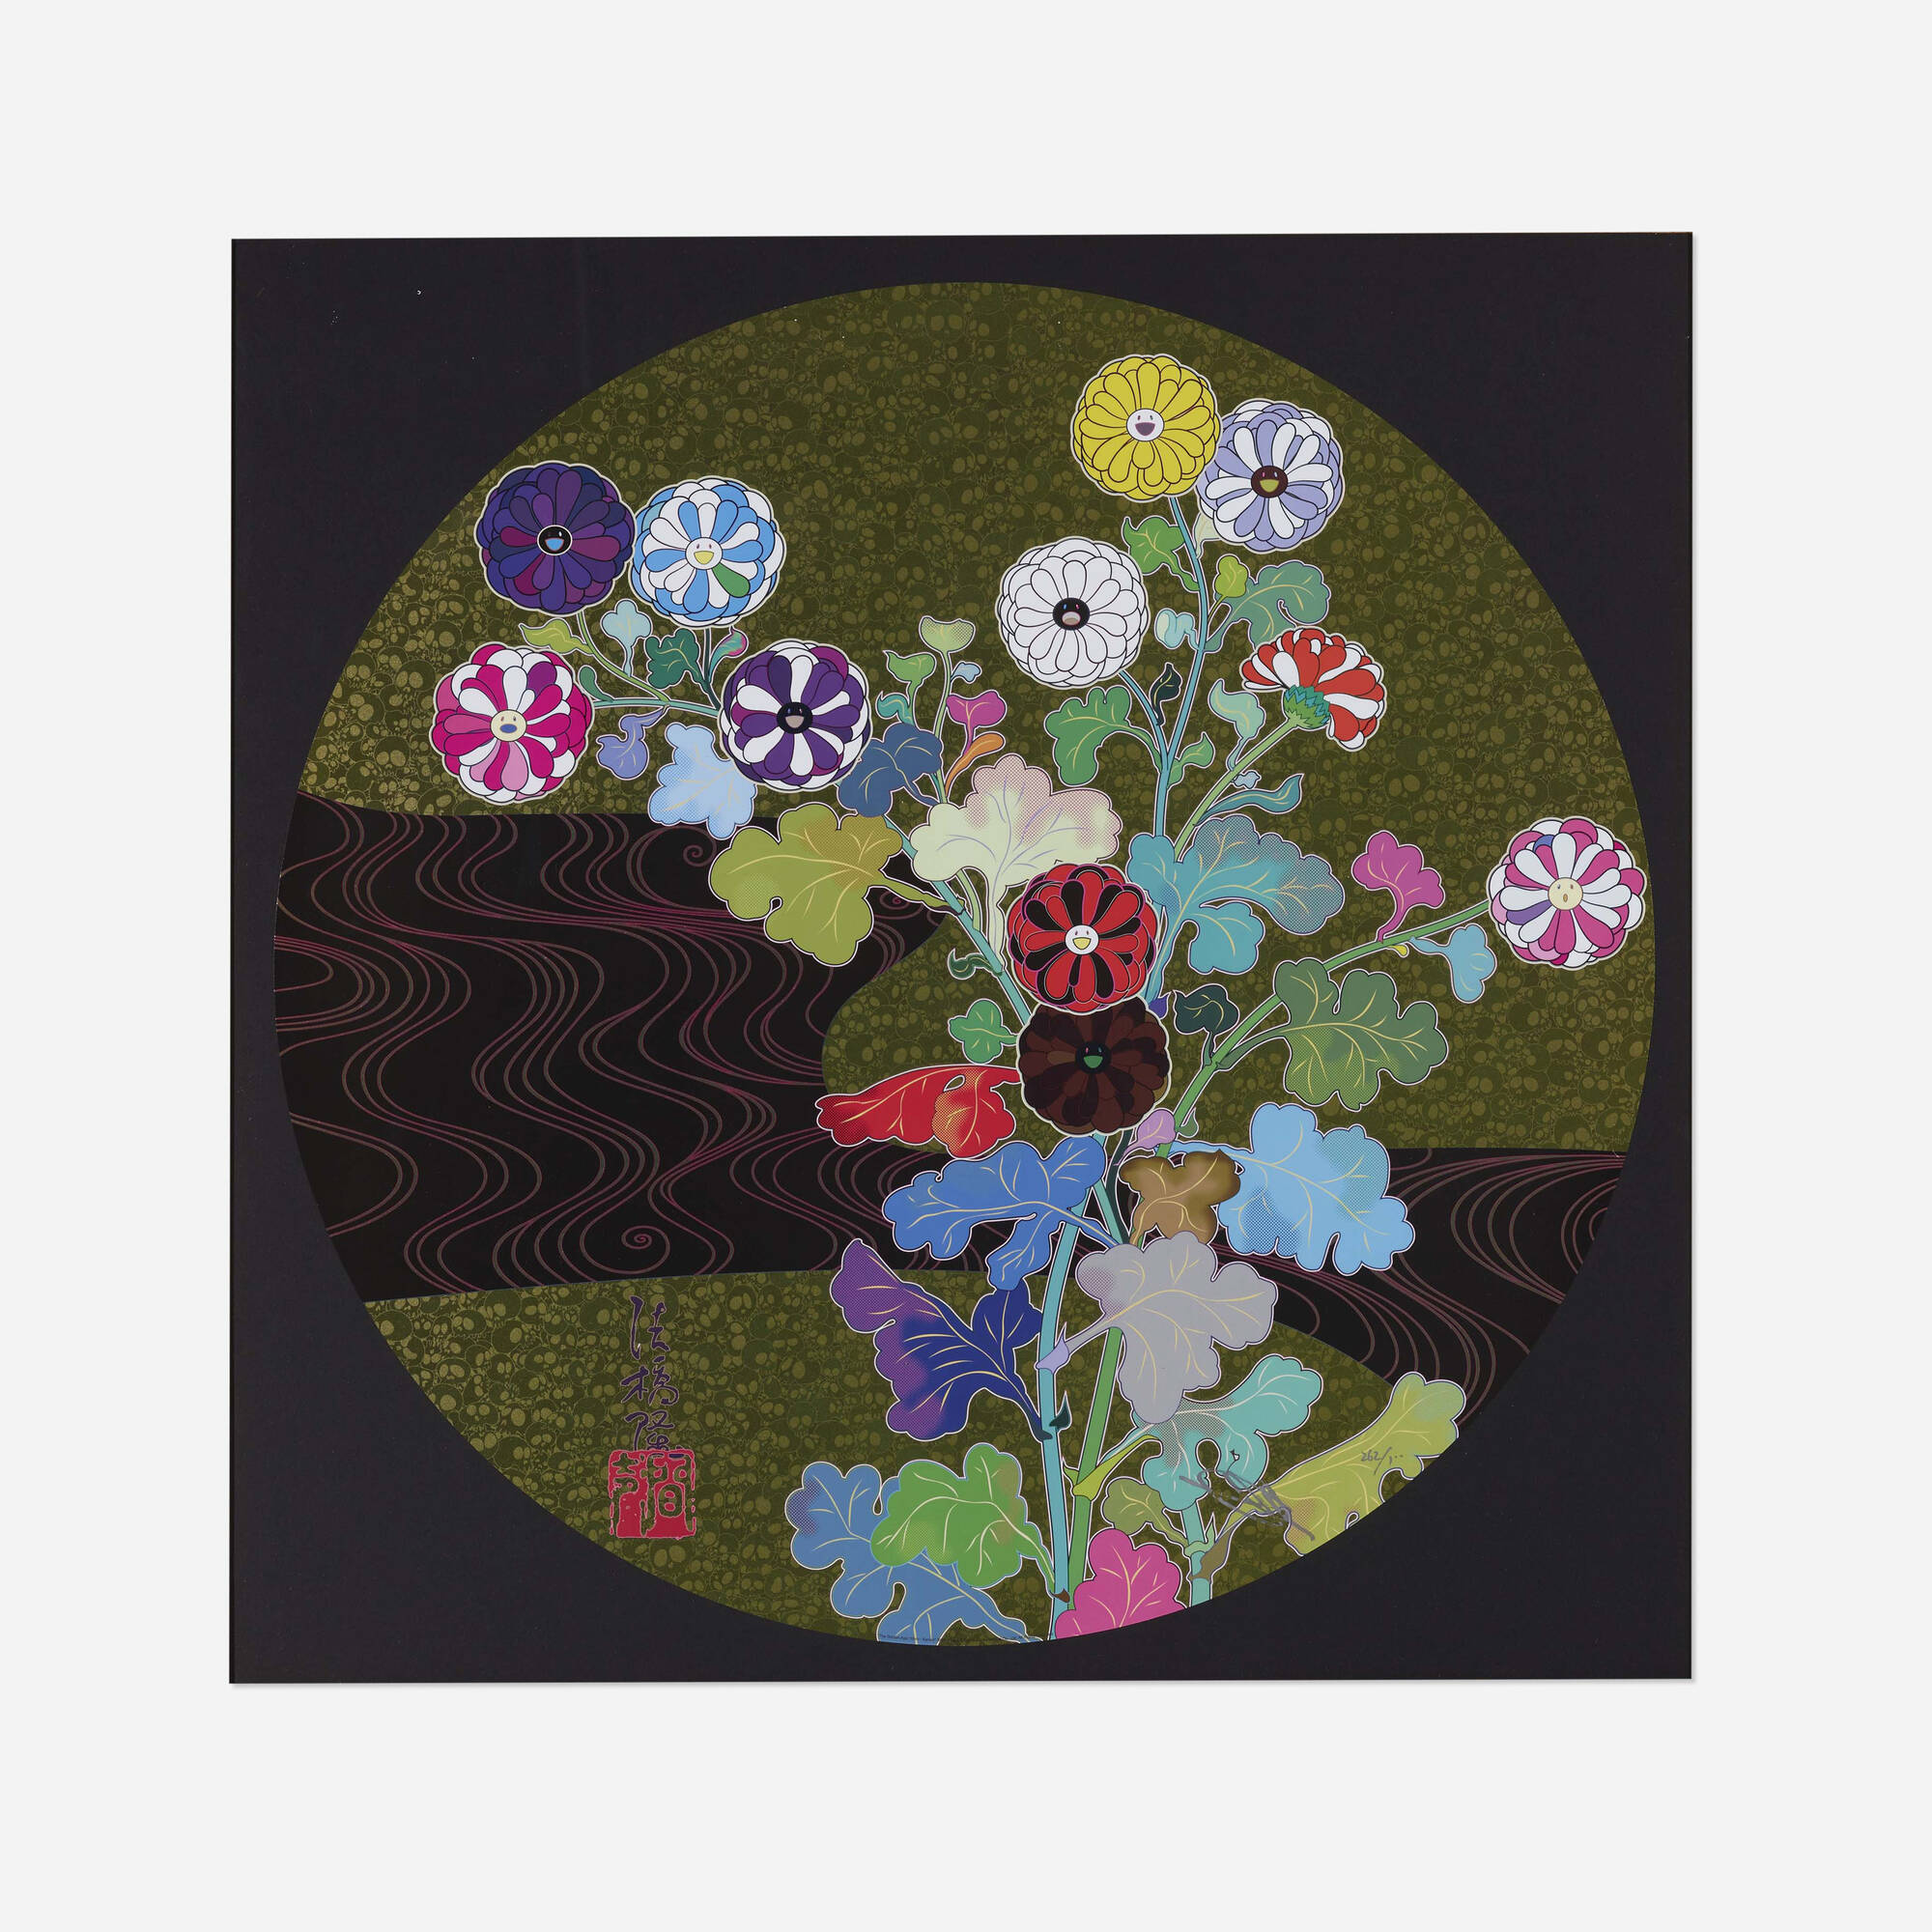 takashi murakami designs rugs for louis vuitton